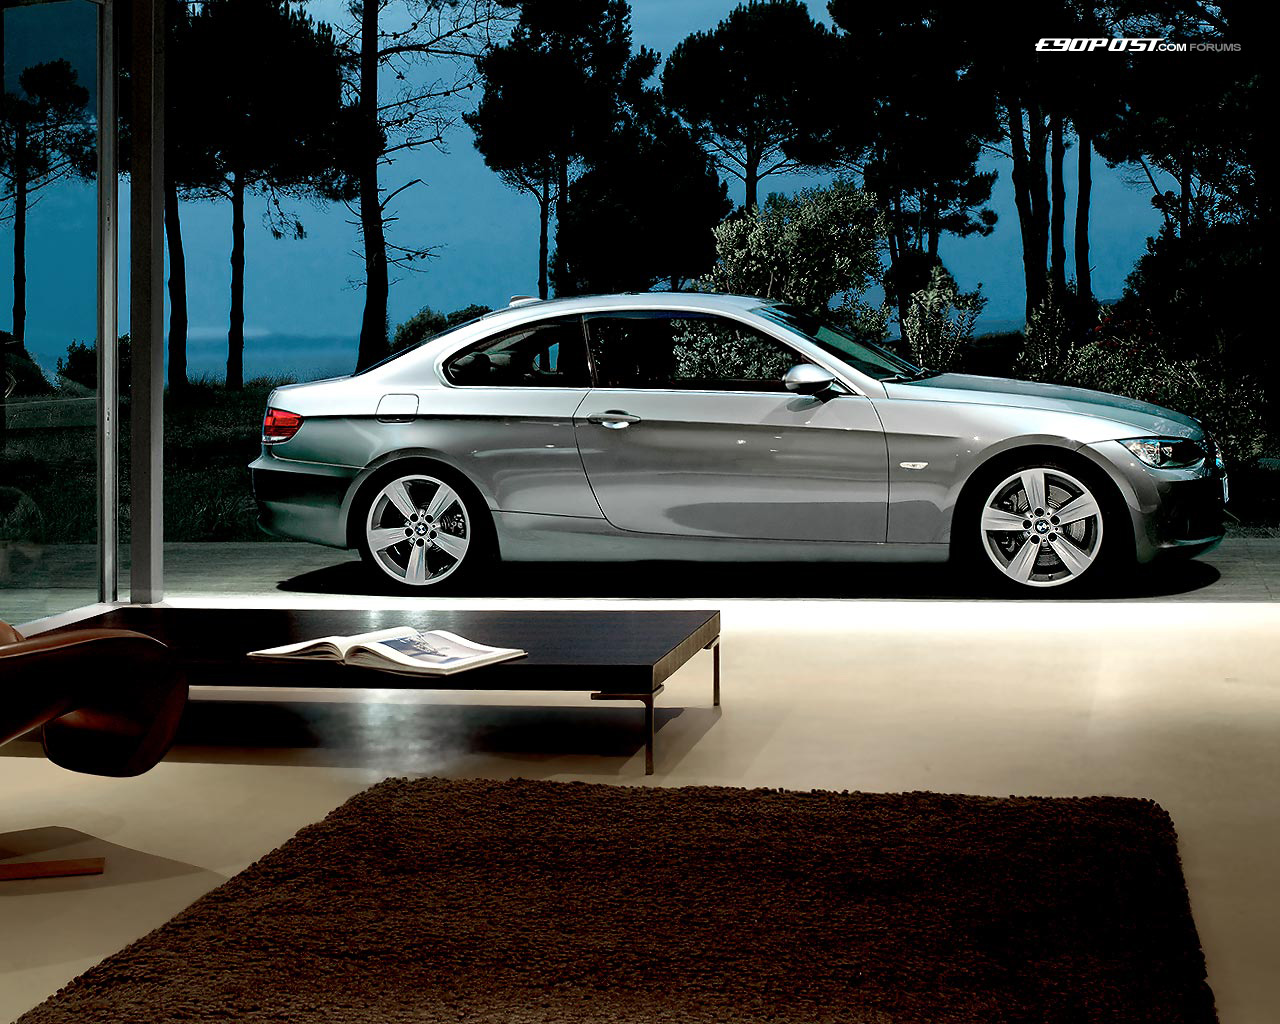 bmw 335i wallpaper,land vehicle,vehicle,car,personal luxury car,luxury vehicle